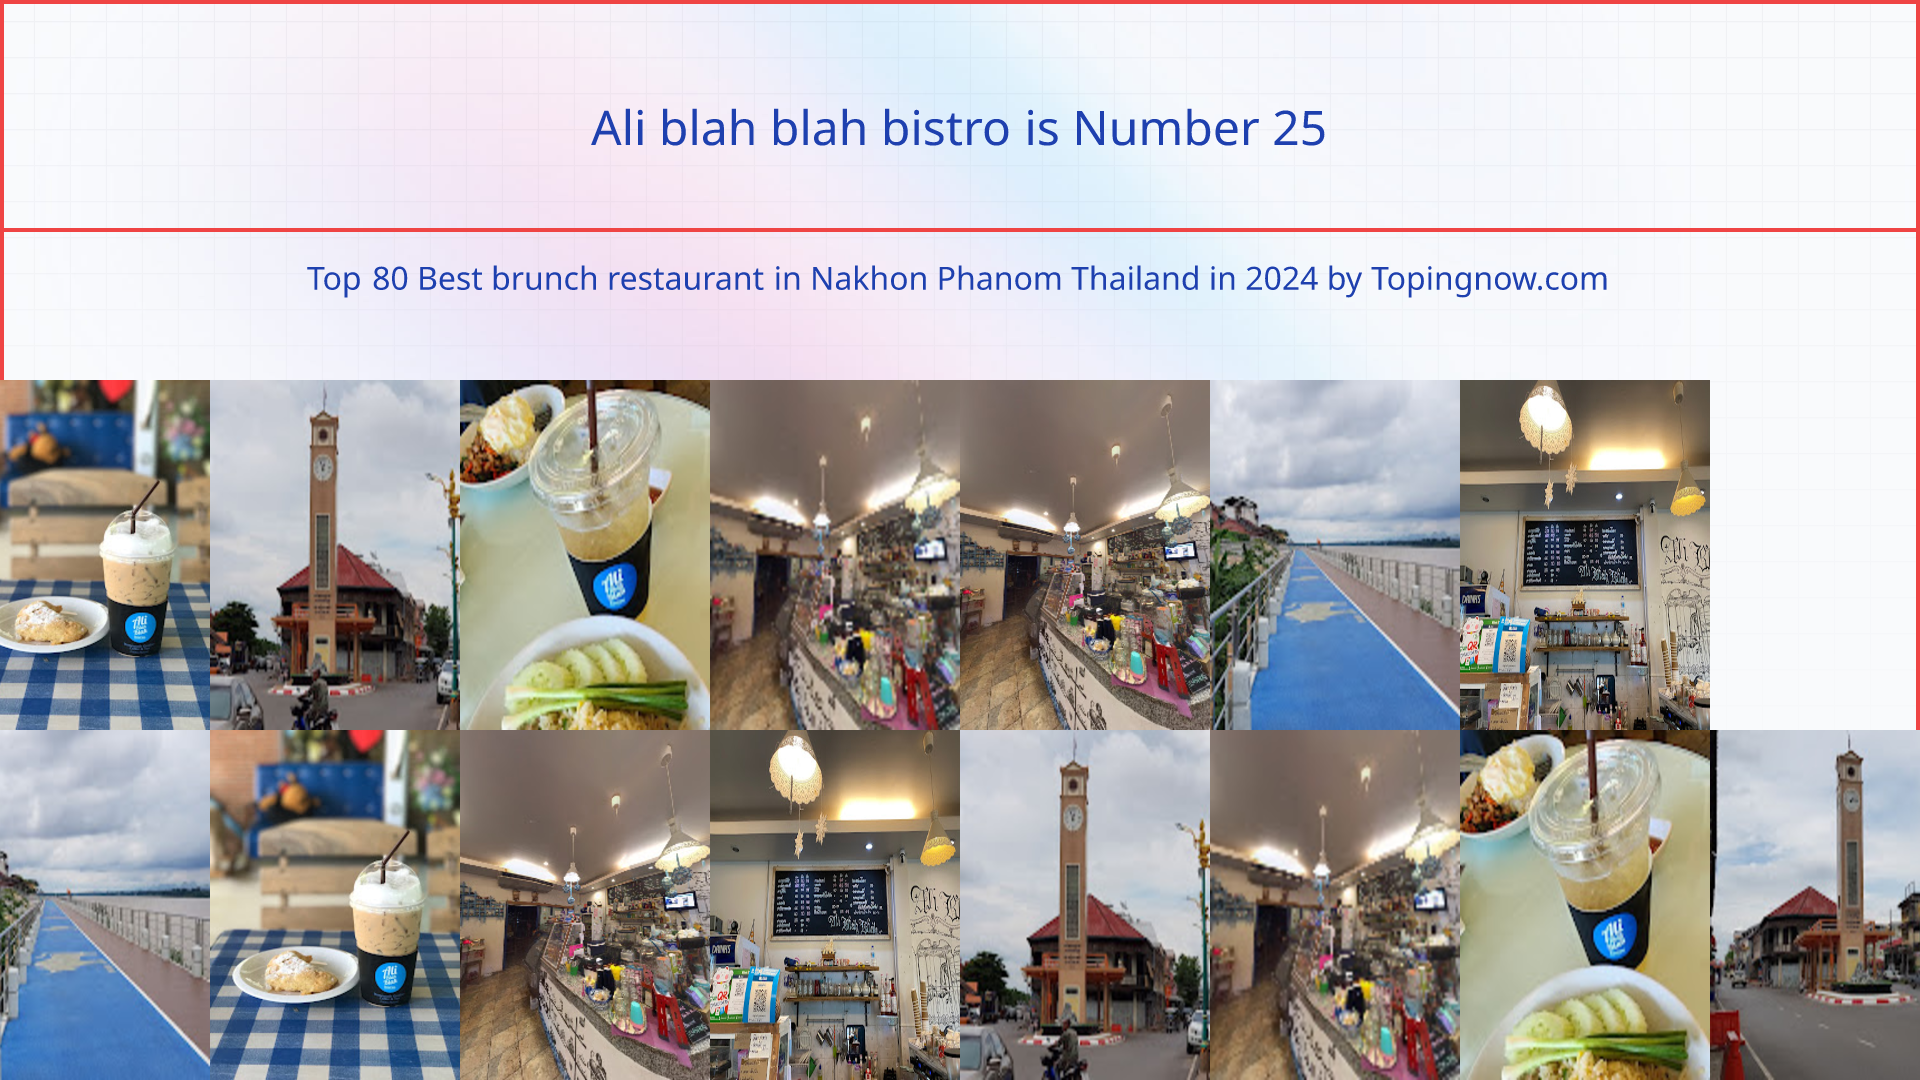 Ali blah blah bistro: Top 80 Best brunch restaurant in Nakhon Phanom Thailand in 2024